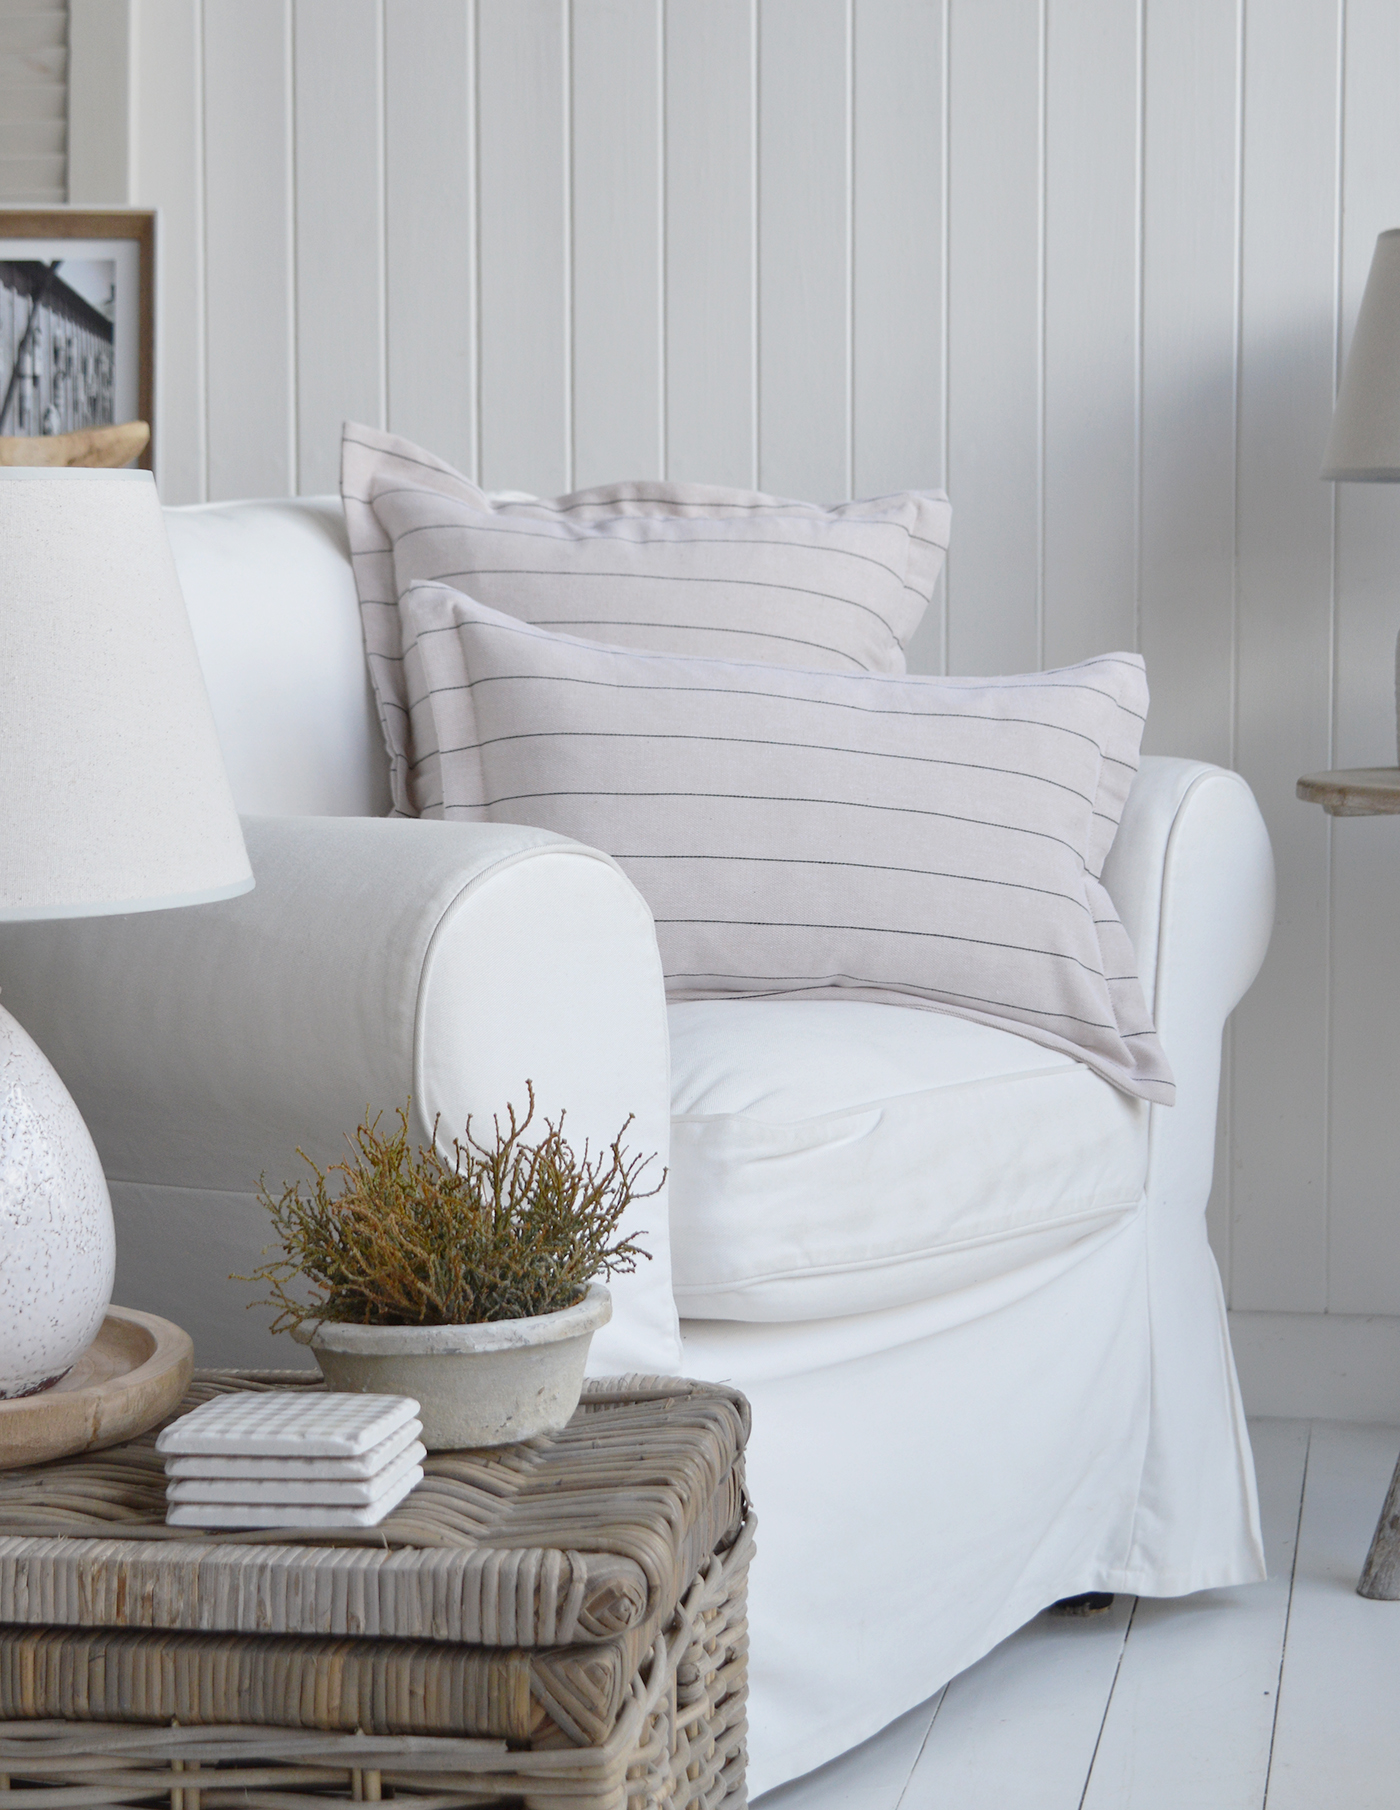 Peabody coastal cushion covers for a Hamptons styled interior